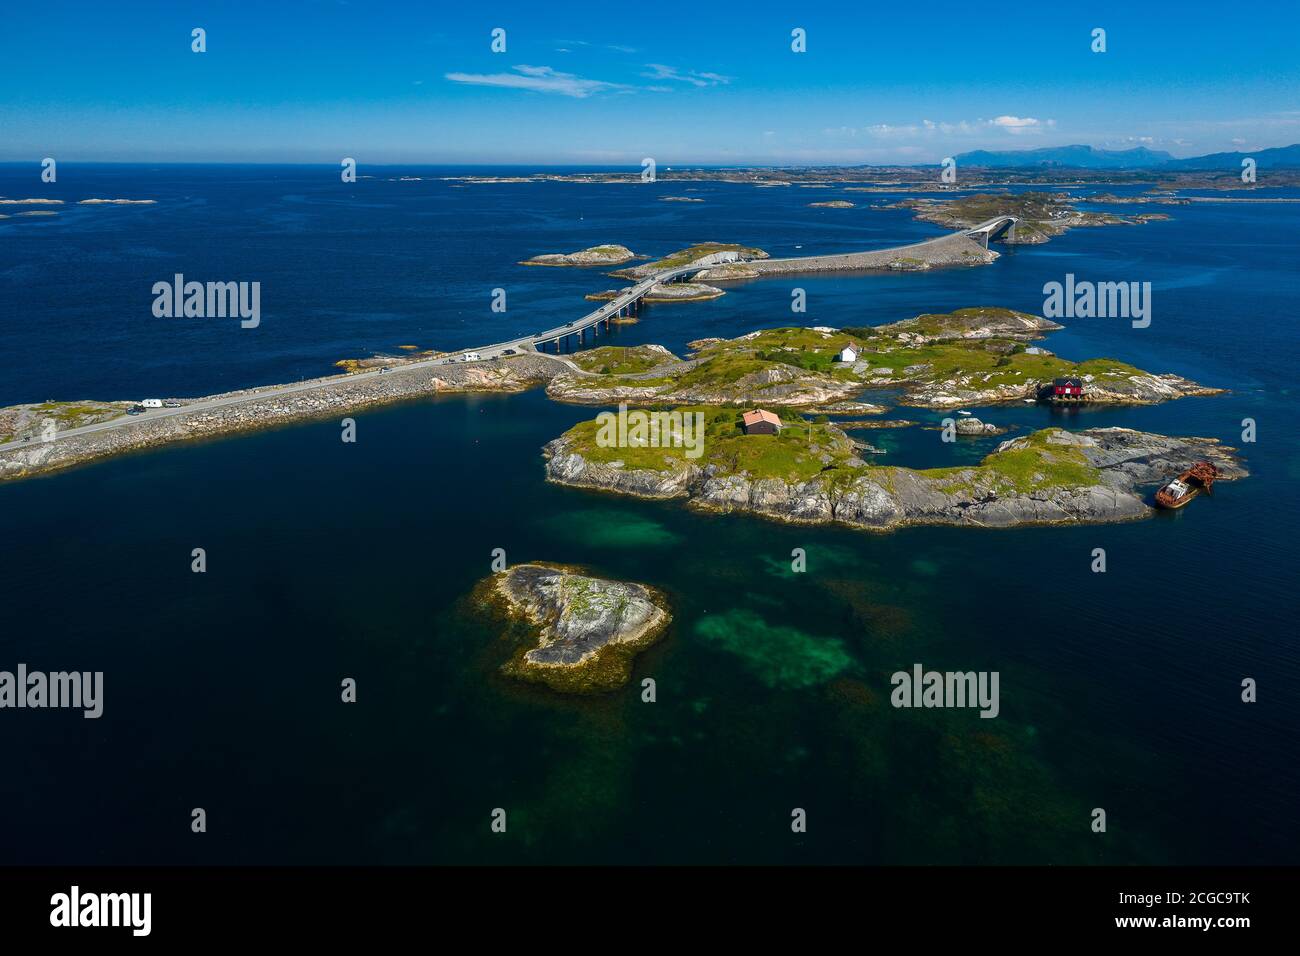 Atlanterhavsvegen, scenic coastal highway, west coast of Norway, drone photo from above showing the unique scenic route of Atlanterhavsvegen Stock Photo